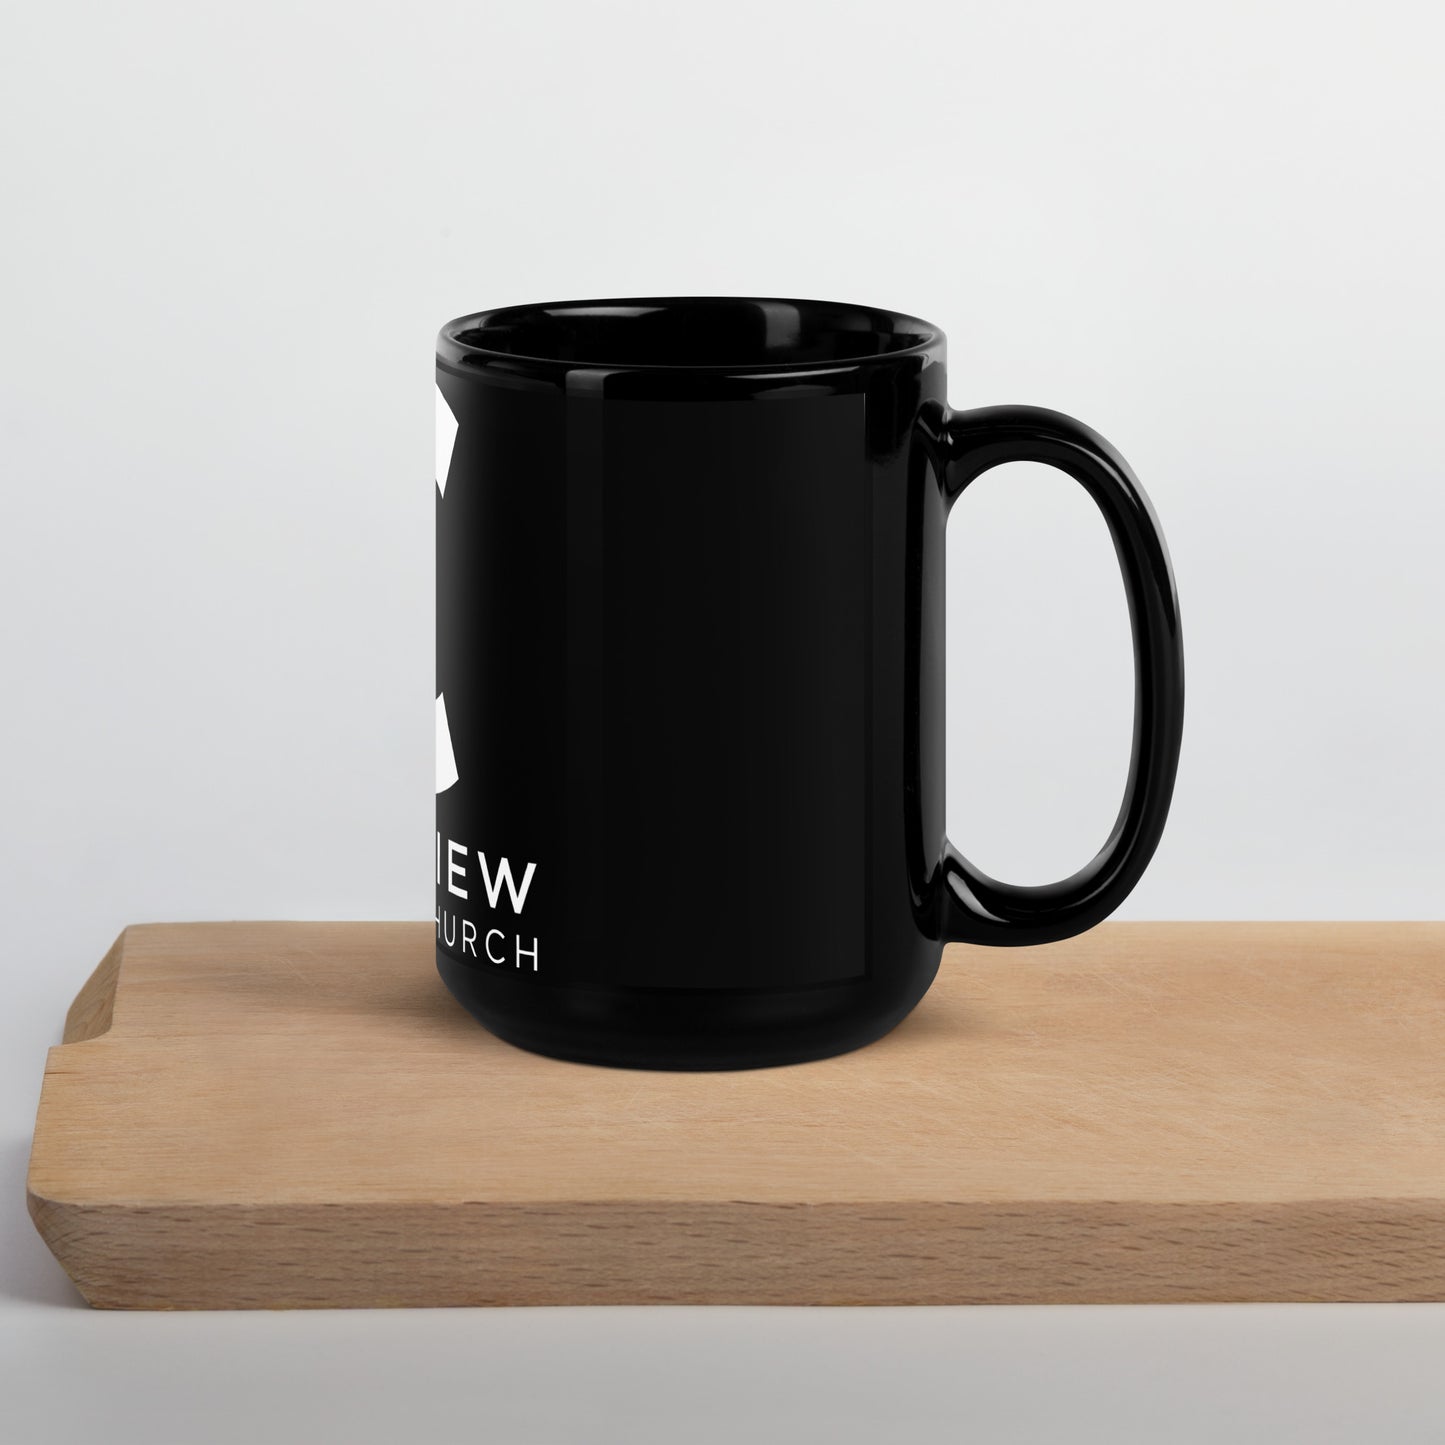 CrossView Black Glossy Mug